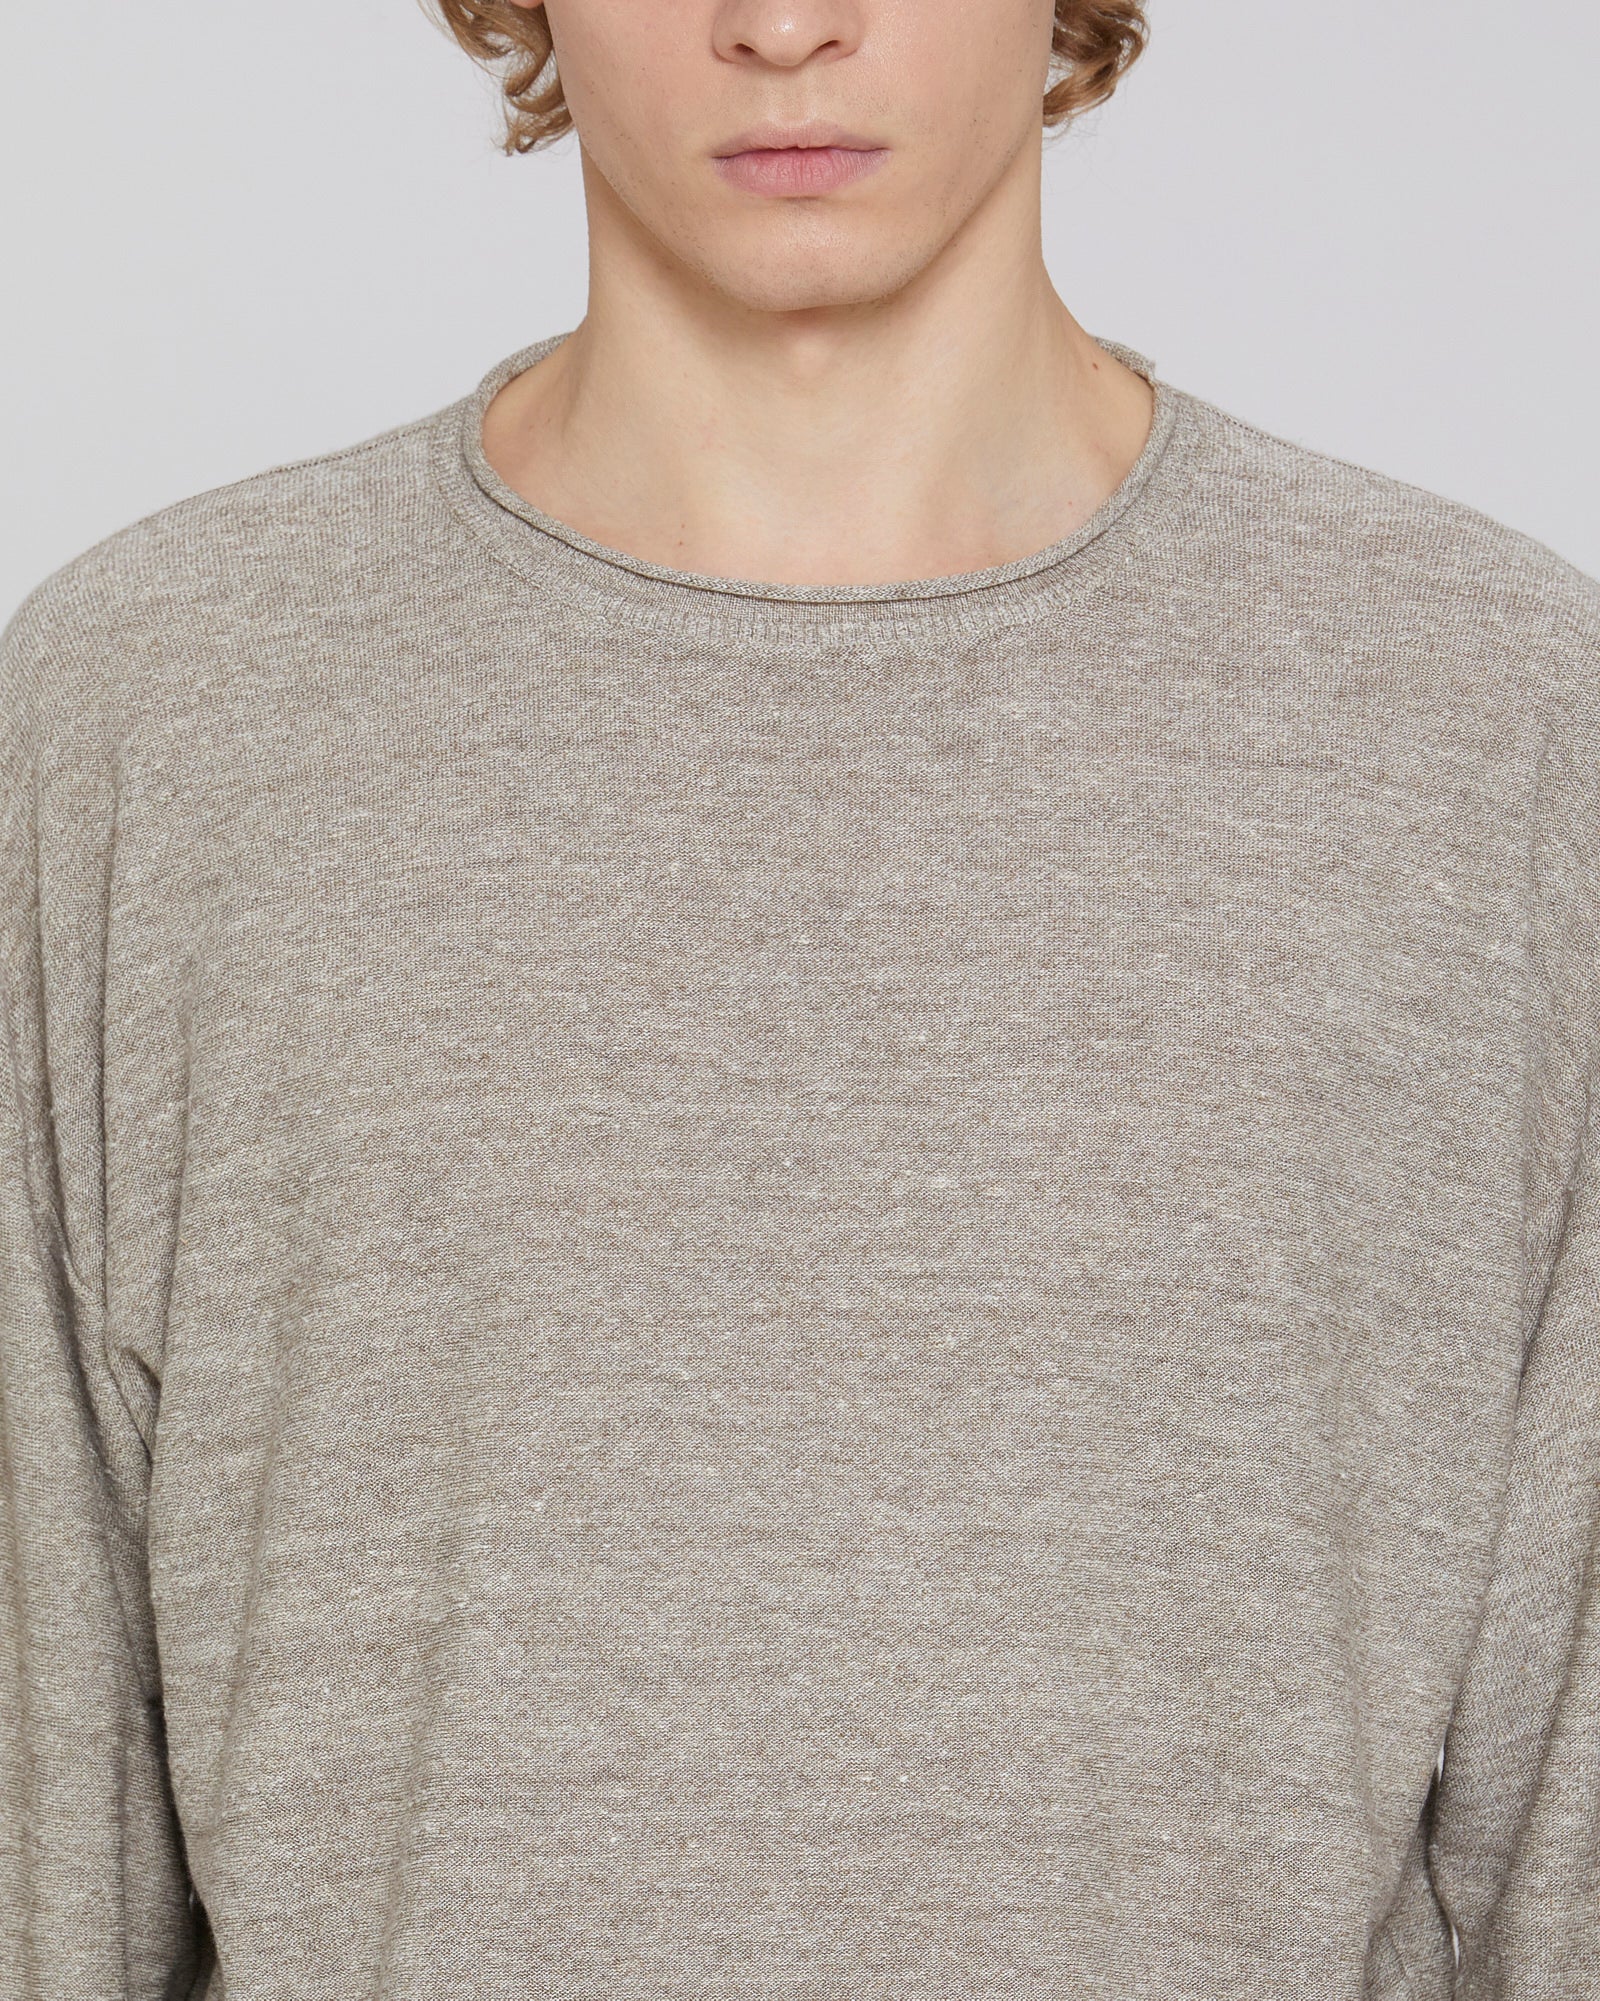 Long-sleeved drop-shoulder sweater